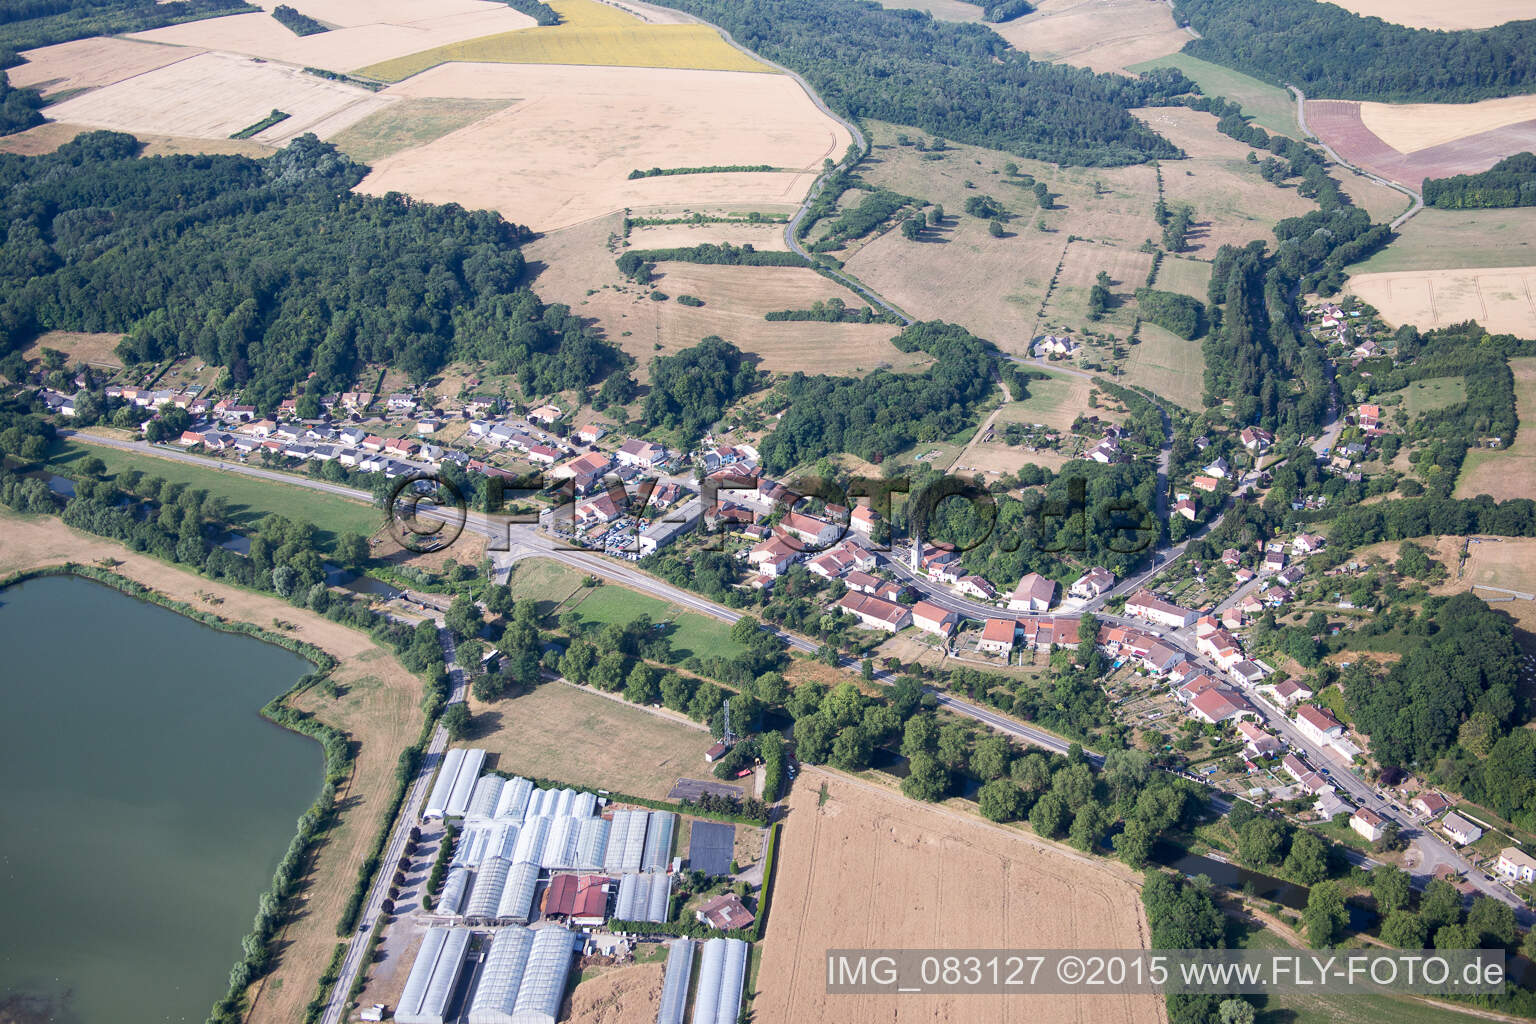 Luftbild von Crévéchamps im Bundesland Meurthe-et-Moselle, Frankreich